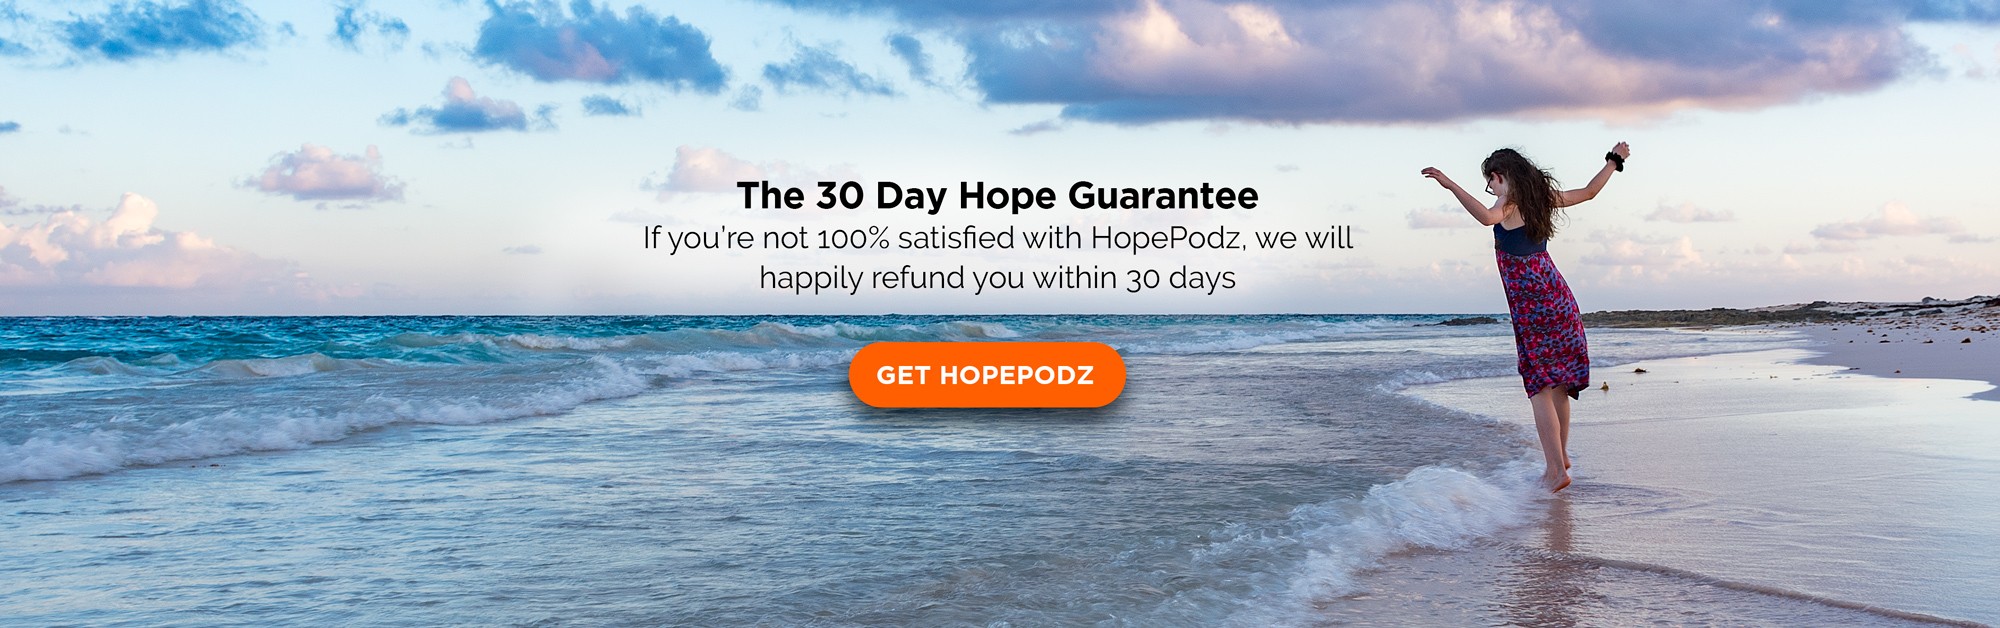 Get HopePodz